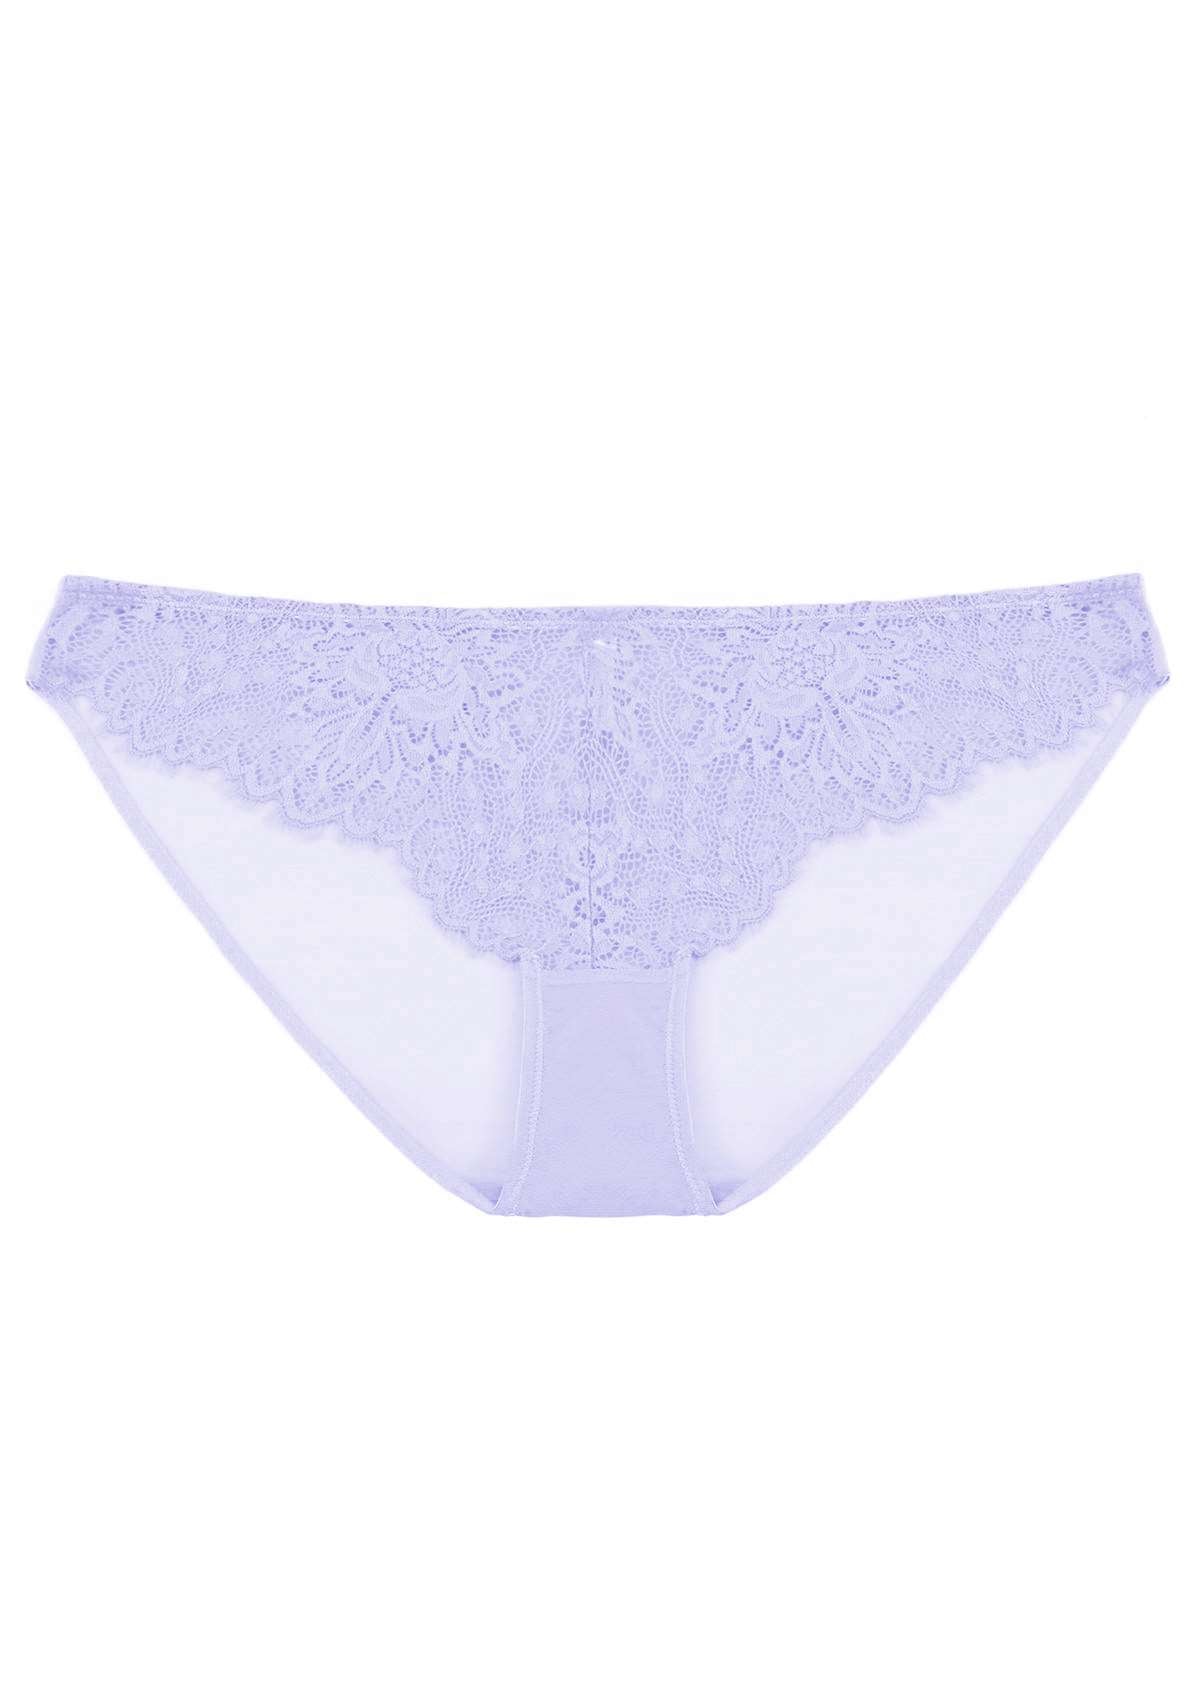 HSIA Sunflower Exquisite Lace Bikini Underwear - L / Purple